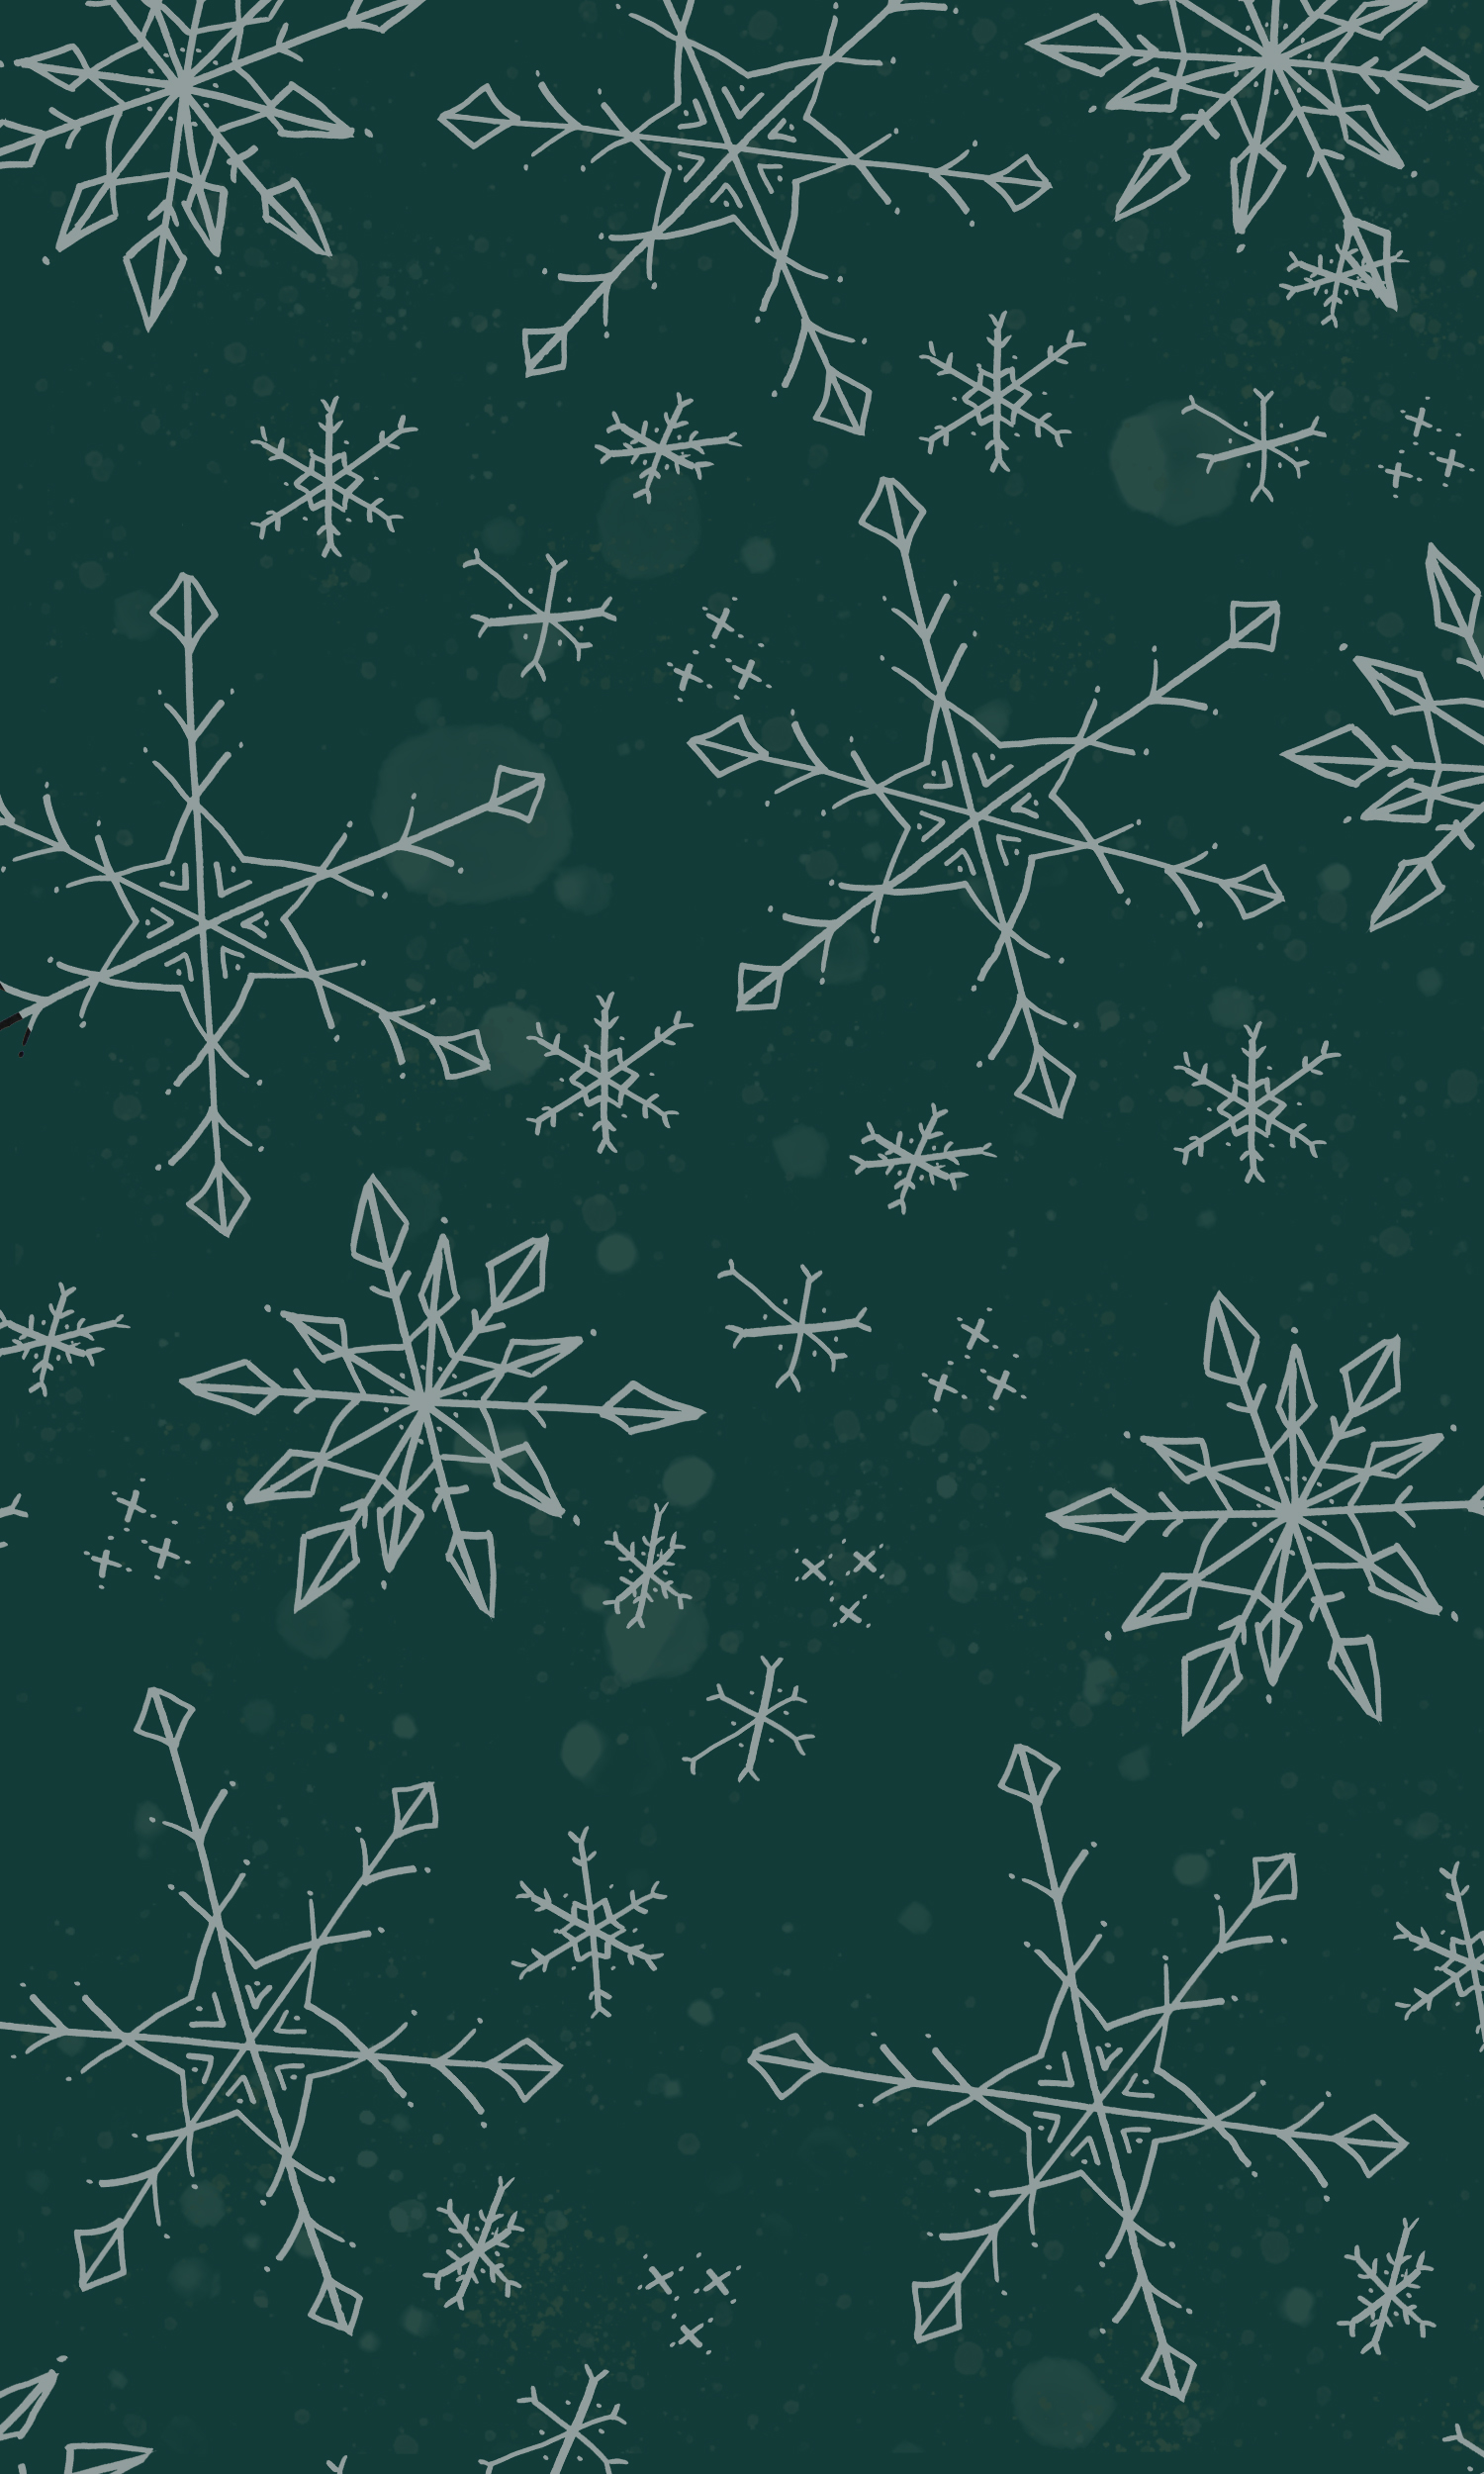 Snowflake iPhone Wallpaper - Danielle Verderame